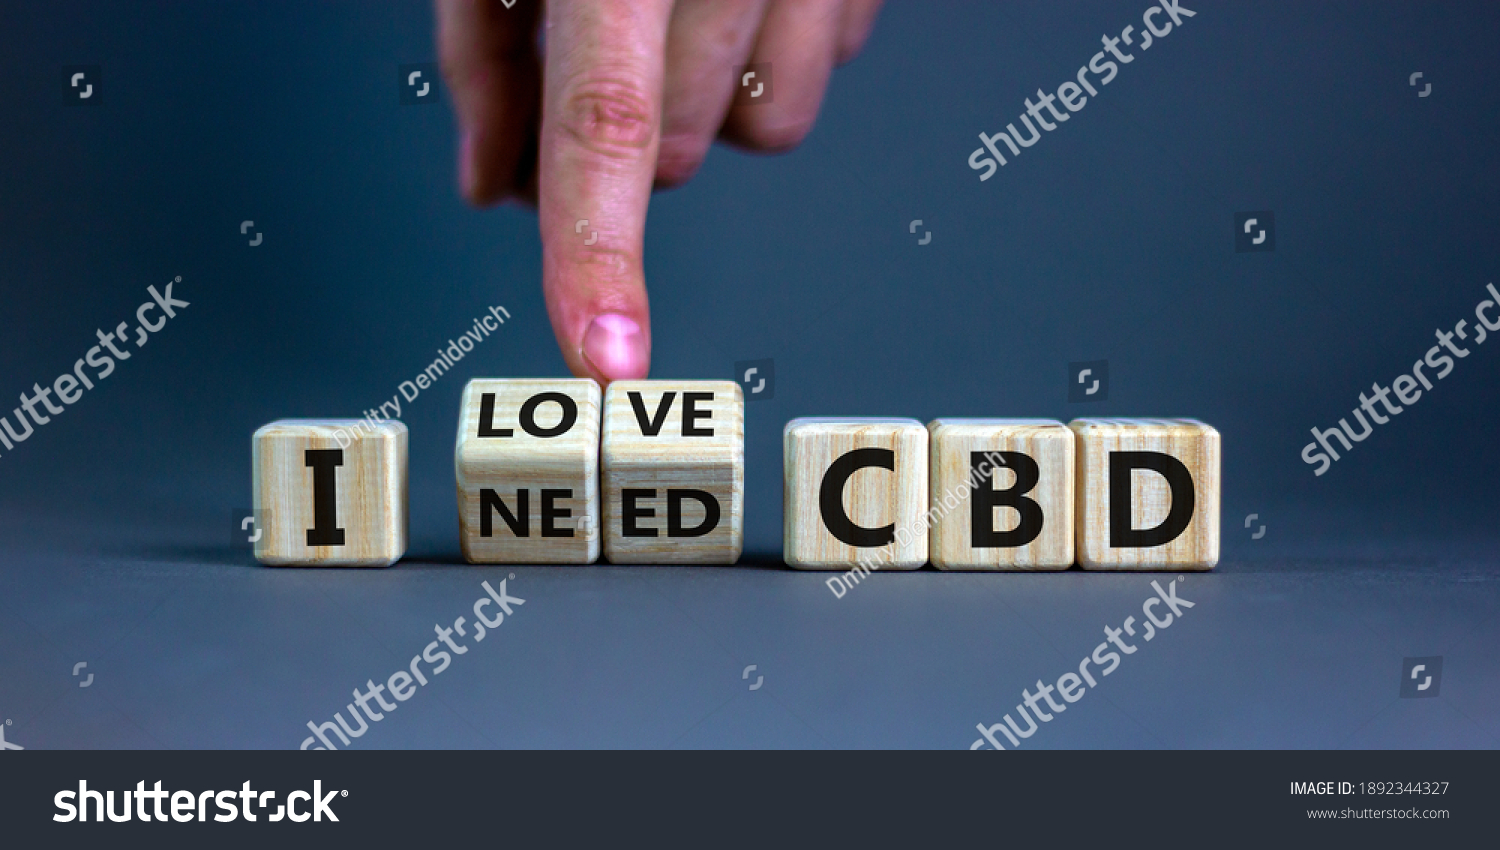 I love CBD, cannabidiol symbol. Hand turns cubes and changes words 'I need CBD' to 'I love CBD'. Beautiful grey background, copy space. Medical and i love CBD cannabidiol concept. #1892344327